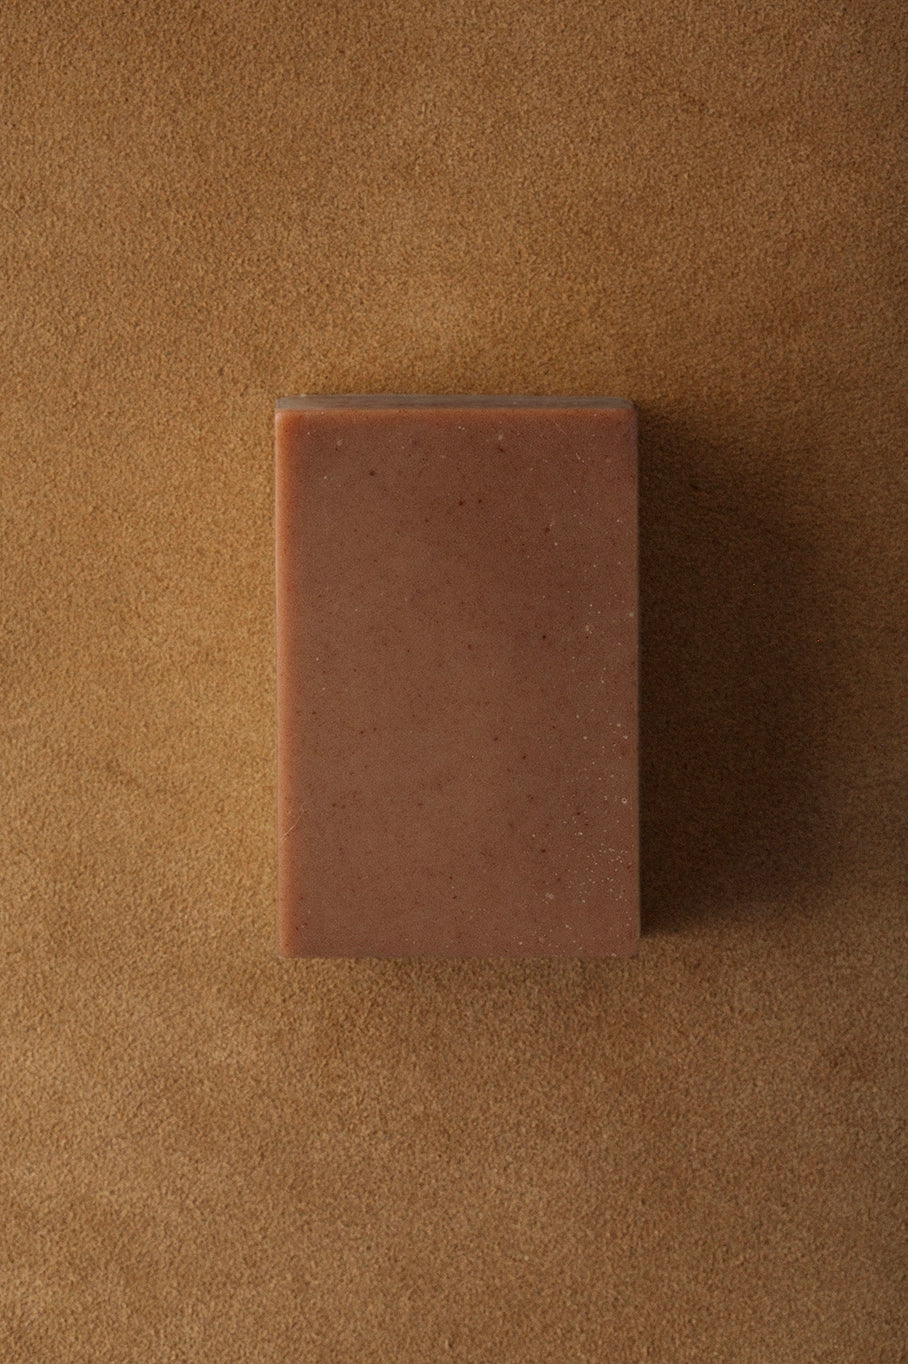 Desert Rose Red Clay Bar Soap